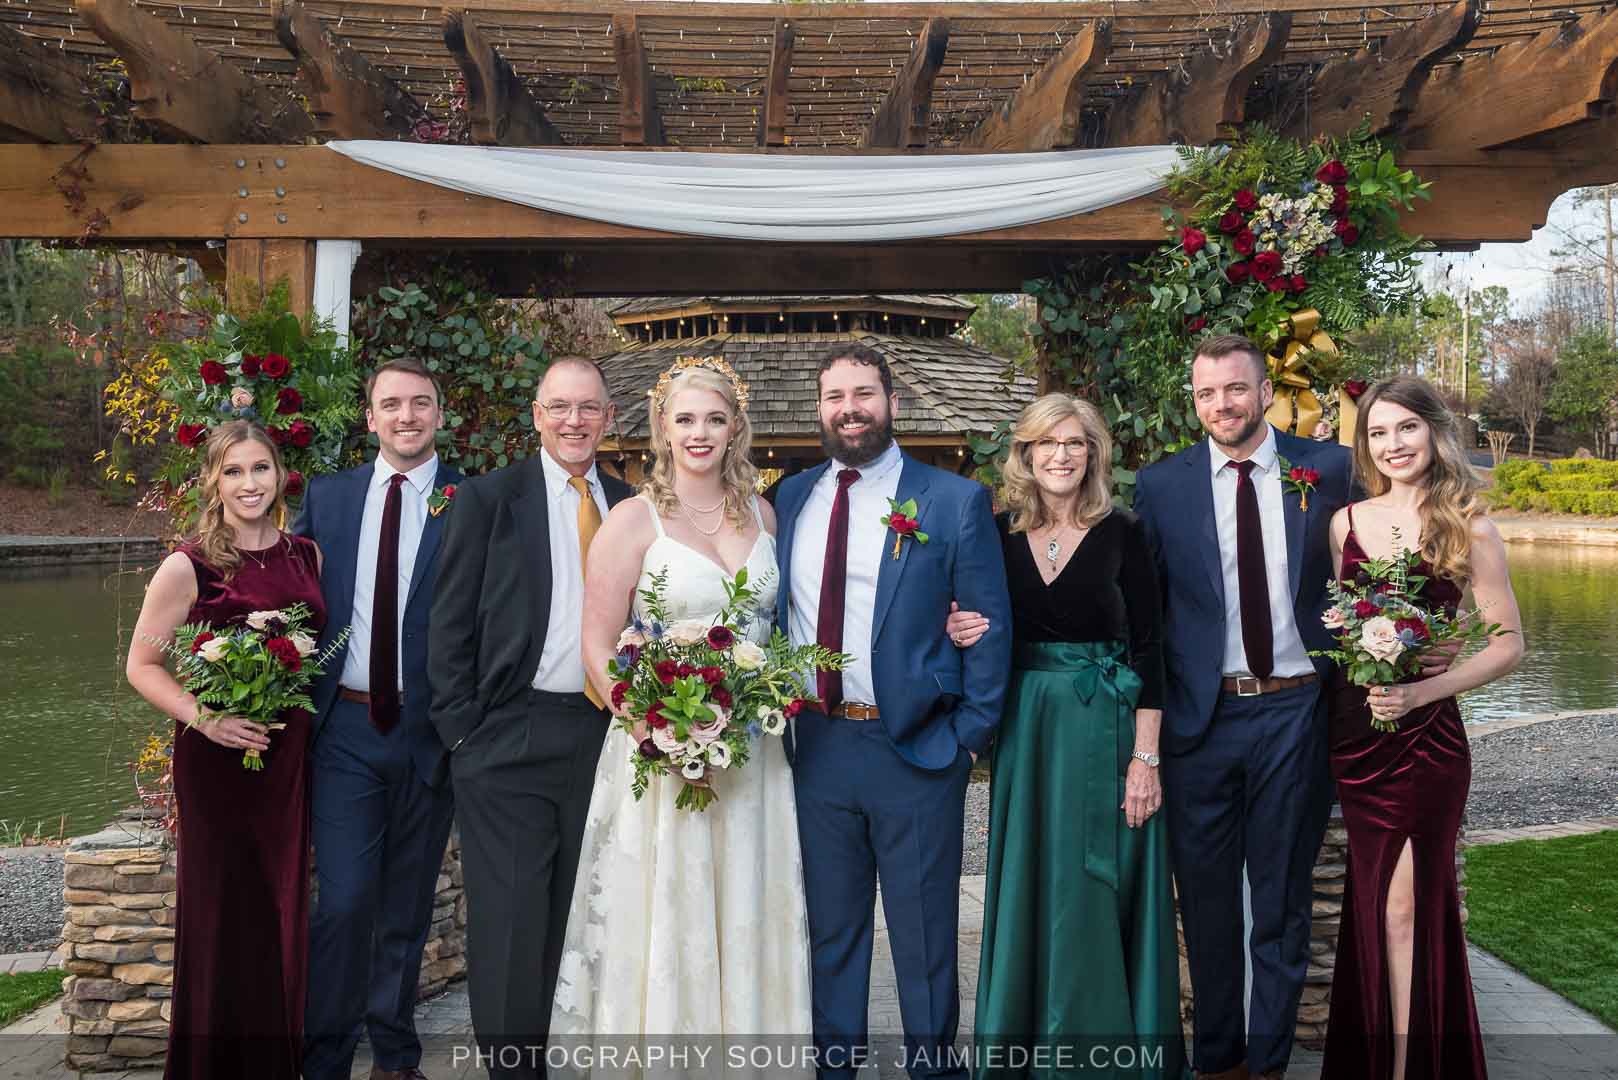 Rocky's Lake Estate Wedding Venue - family portraits with bride's family